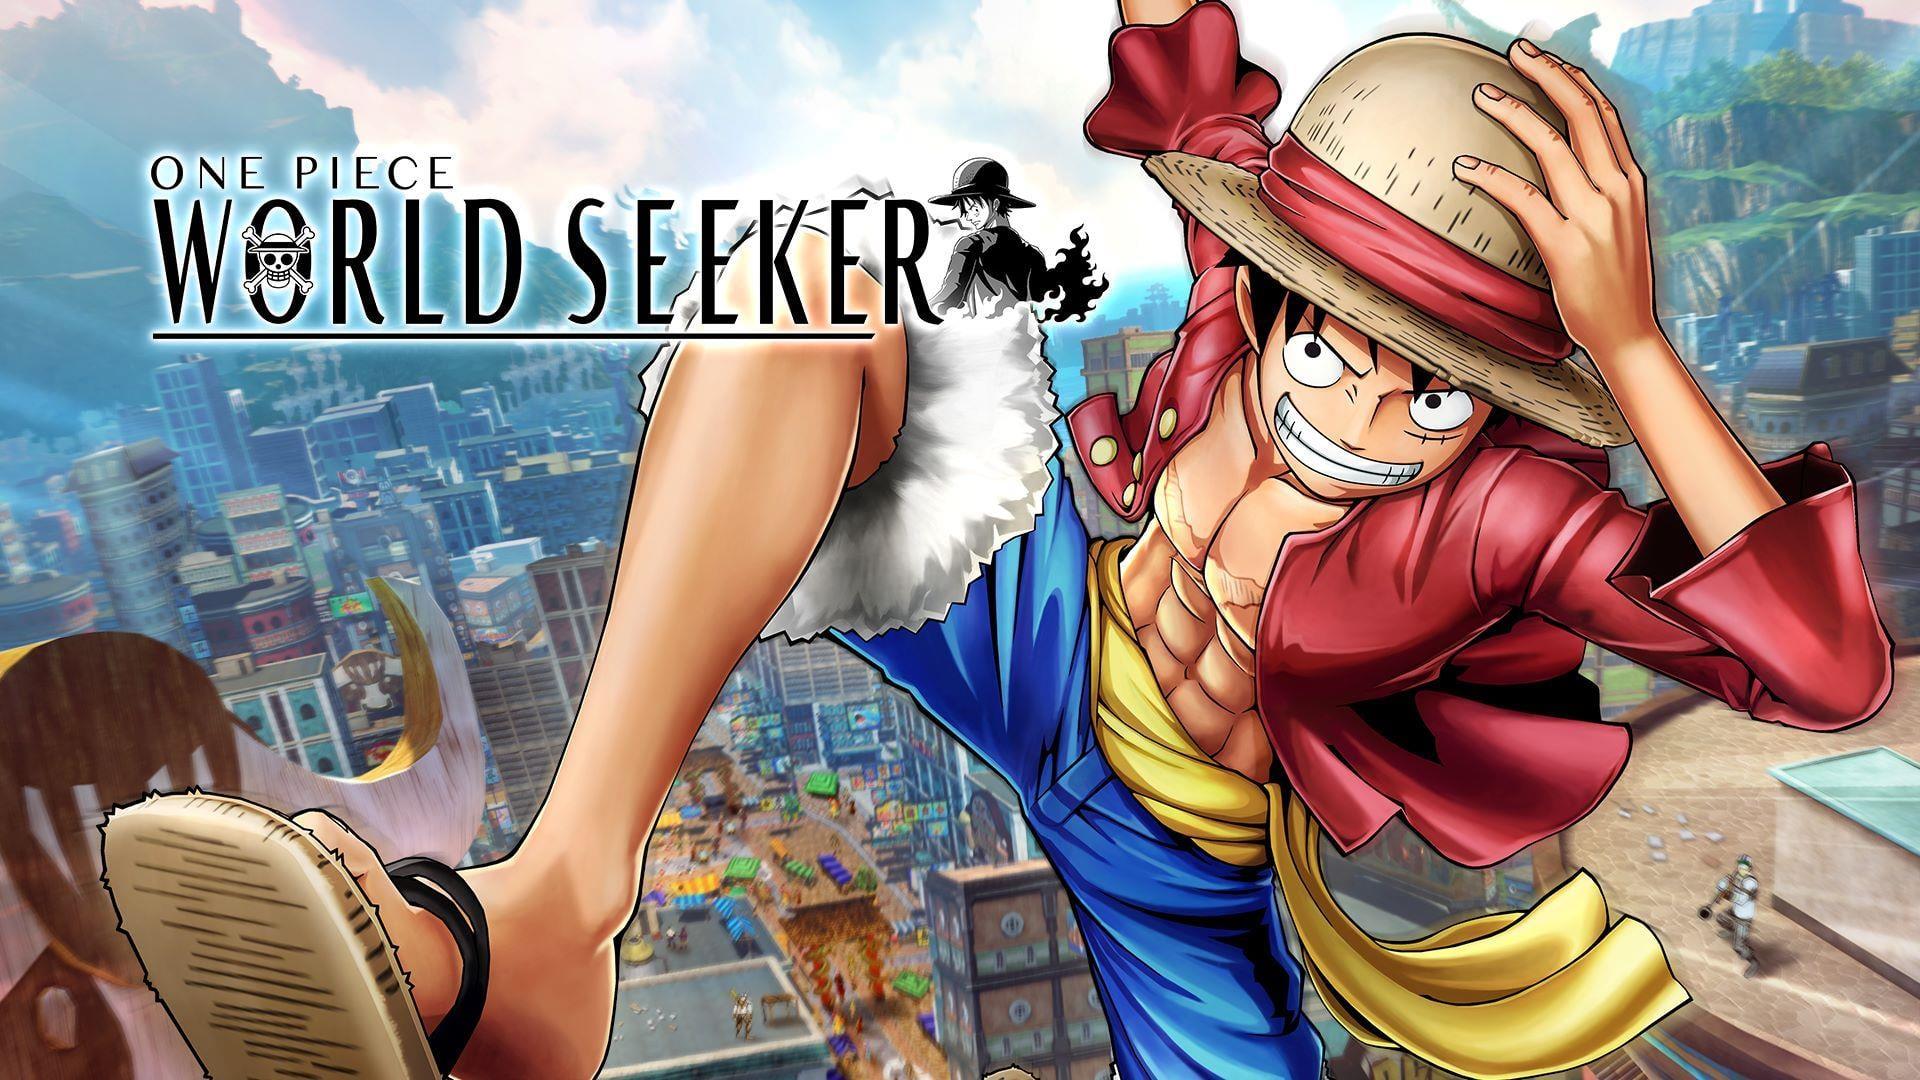 One Piece World Seeker Game HD Wallpaper 67274 1920x1080px